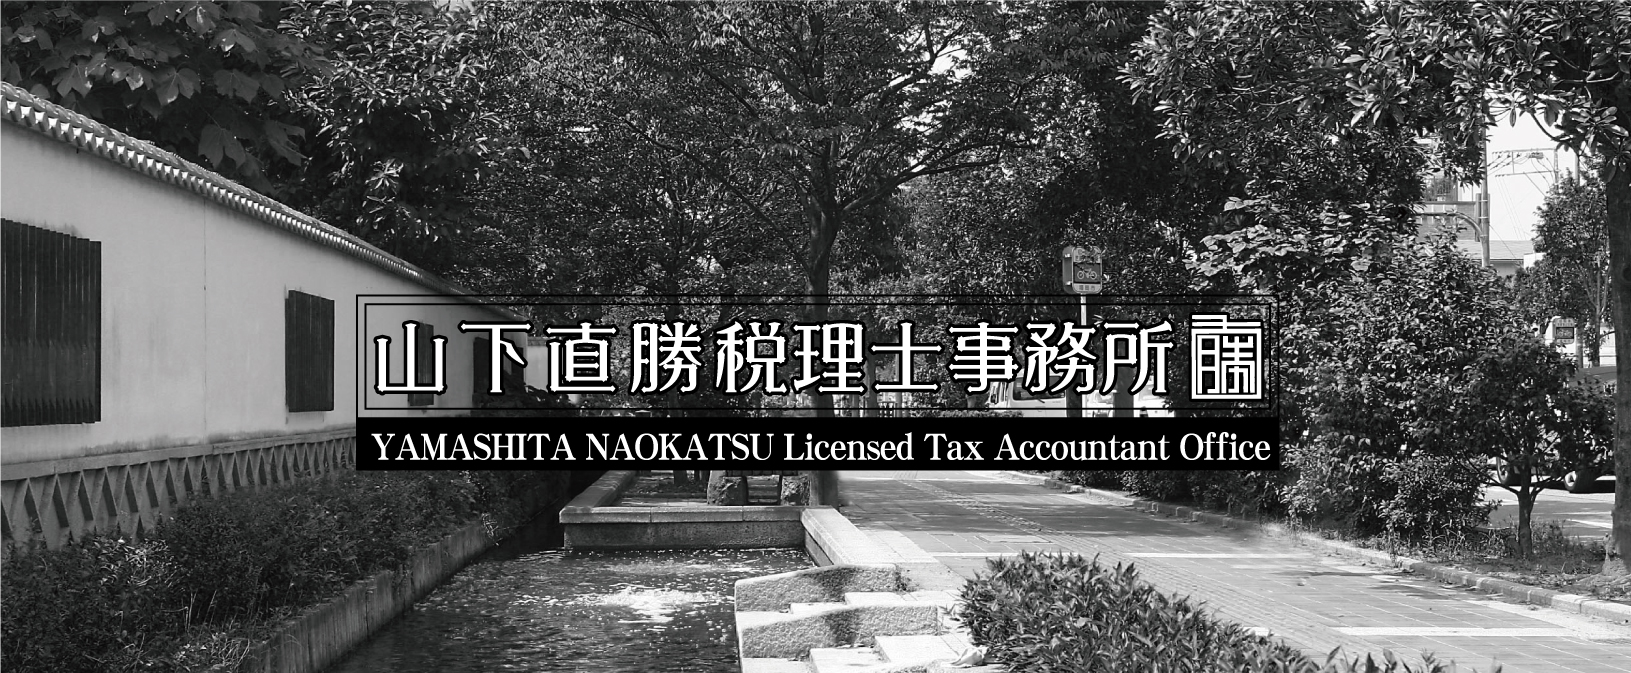 Yamashita Naokatsu LicensedTax Accountant Office